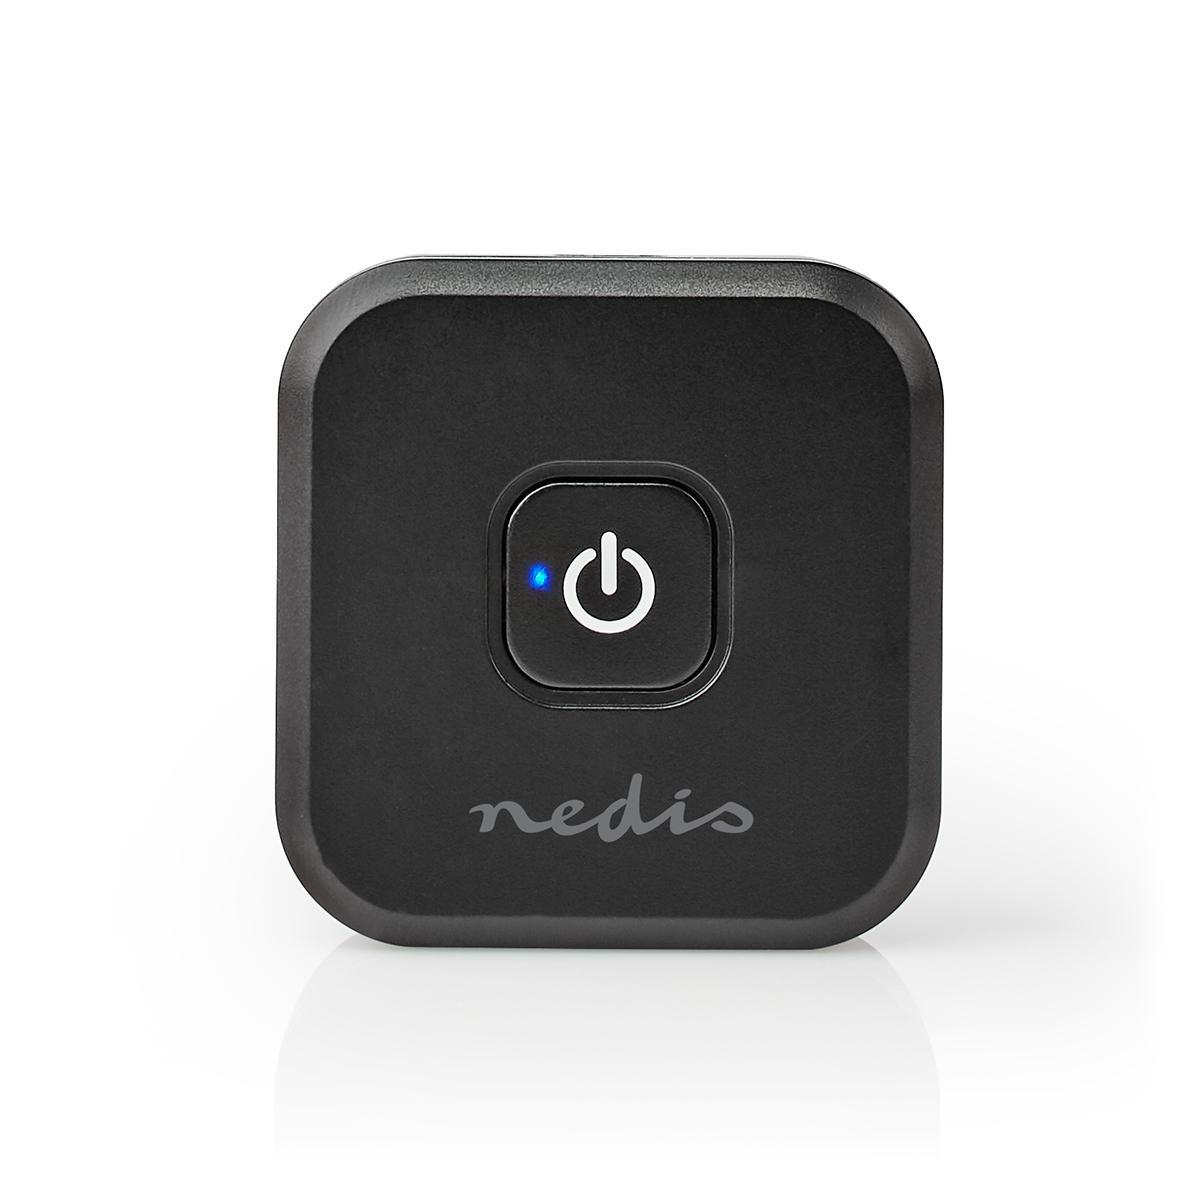 NEDIS BTTR400BK Bluetooth Transmitter